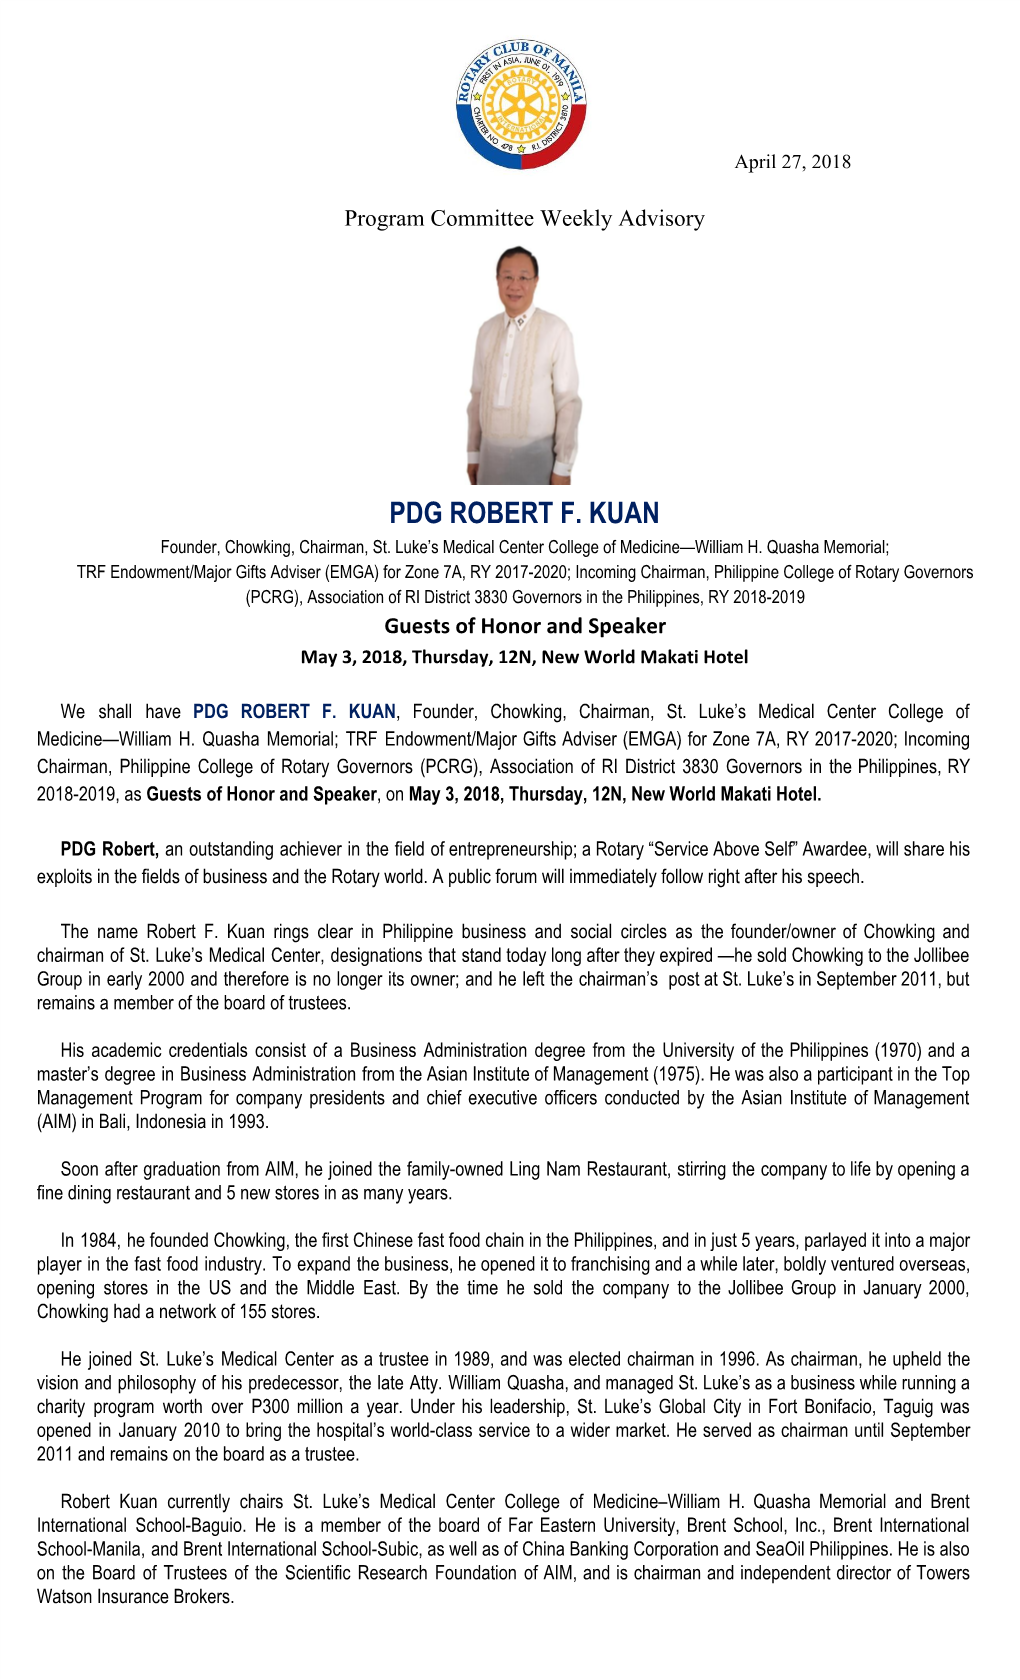 PDG ROBERT F. KUAN Founder, Chowking, Chairman, St